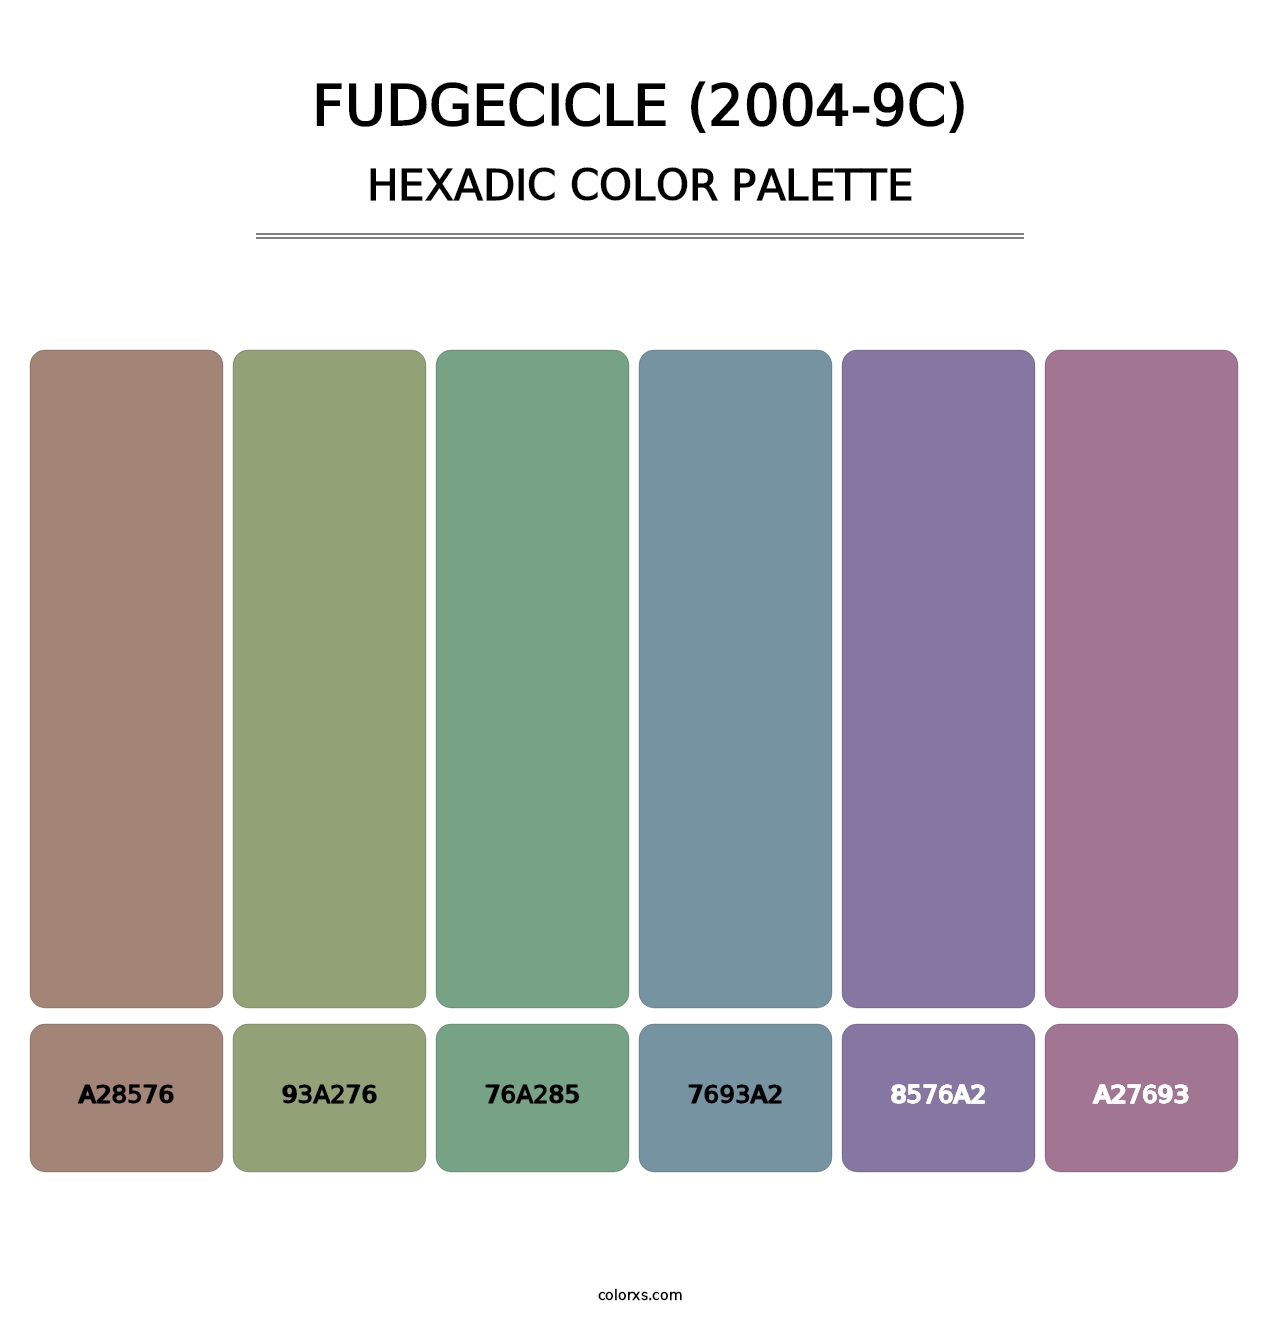 Fudgecicle (2004-9C) - Hexadic Color Palette